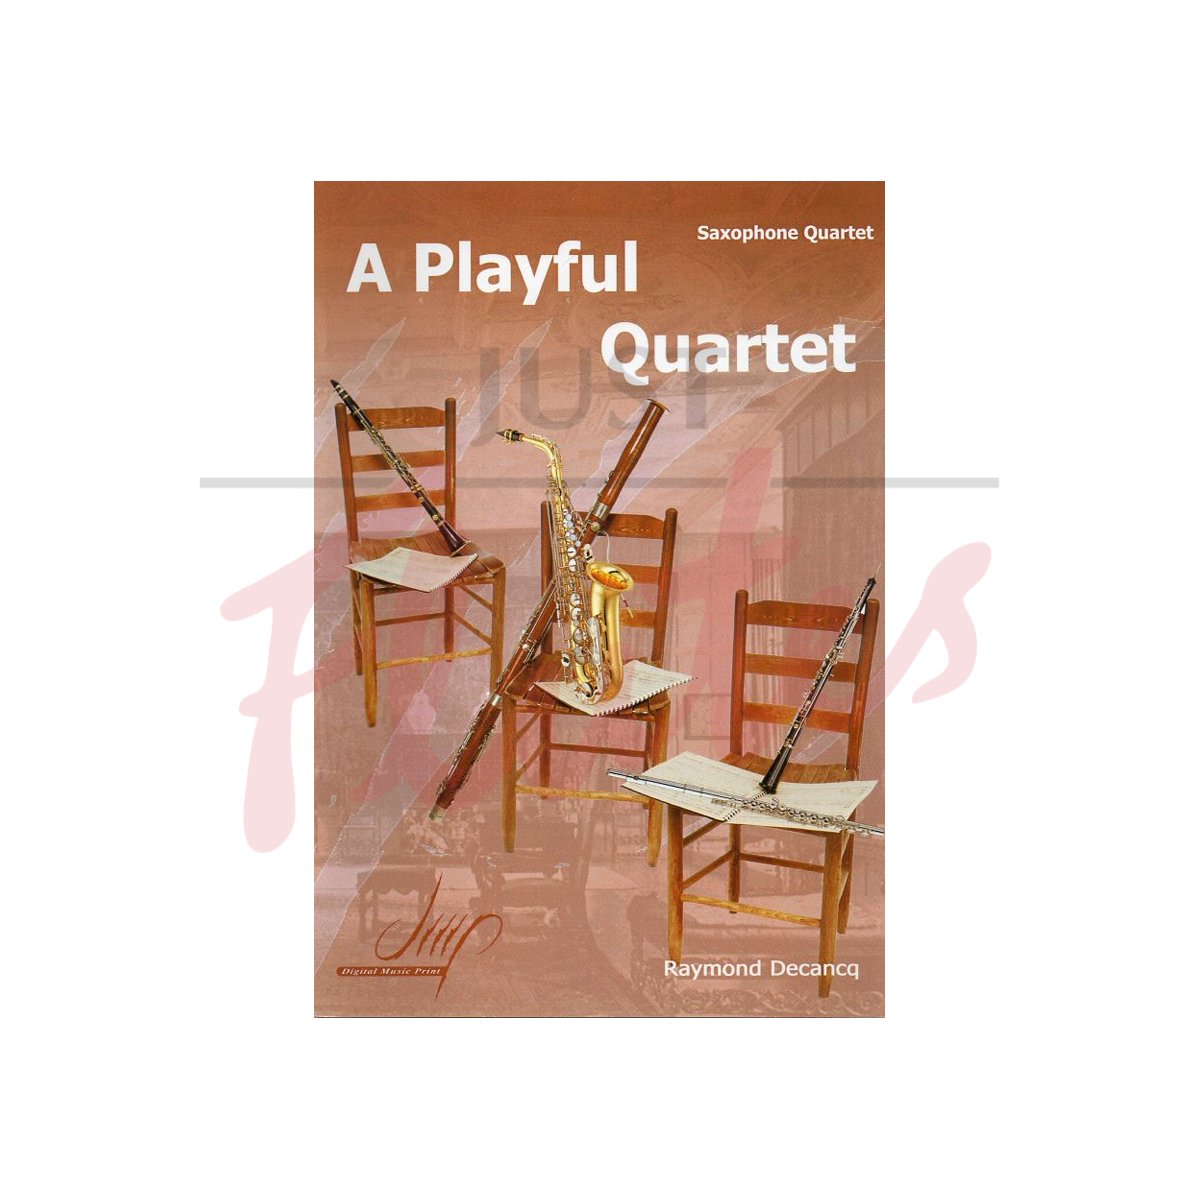 A Playful Quartet (sax quartet)